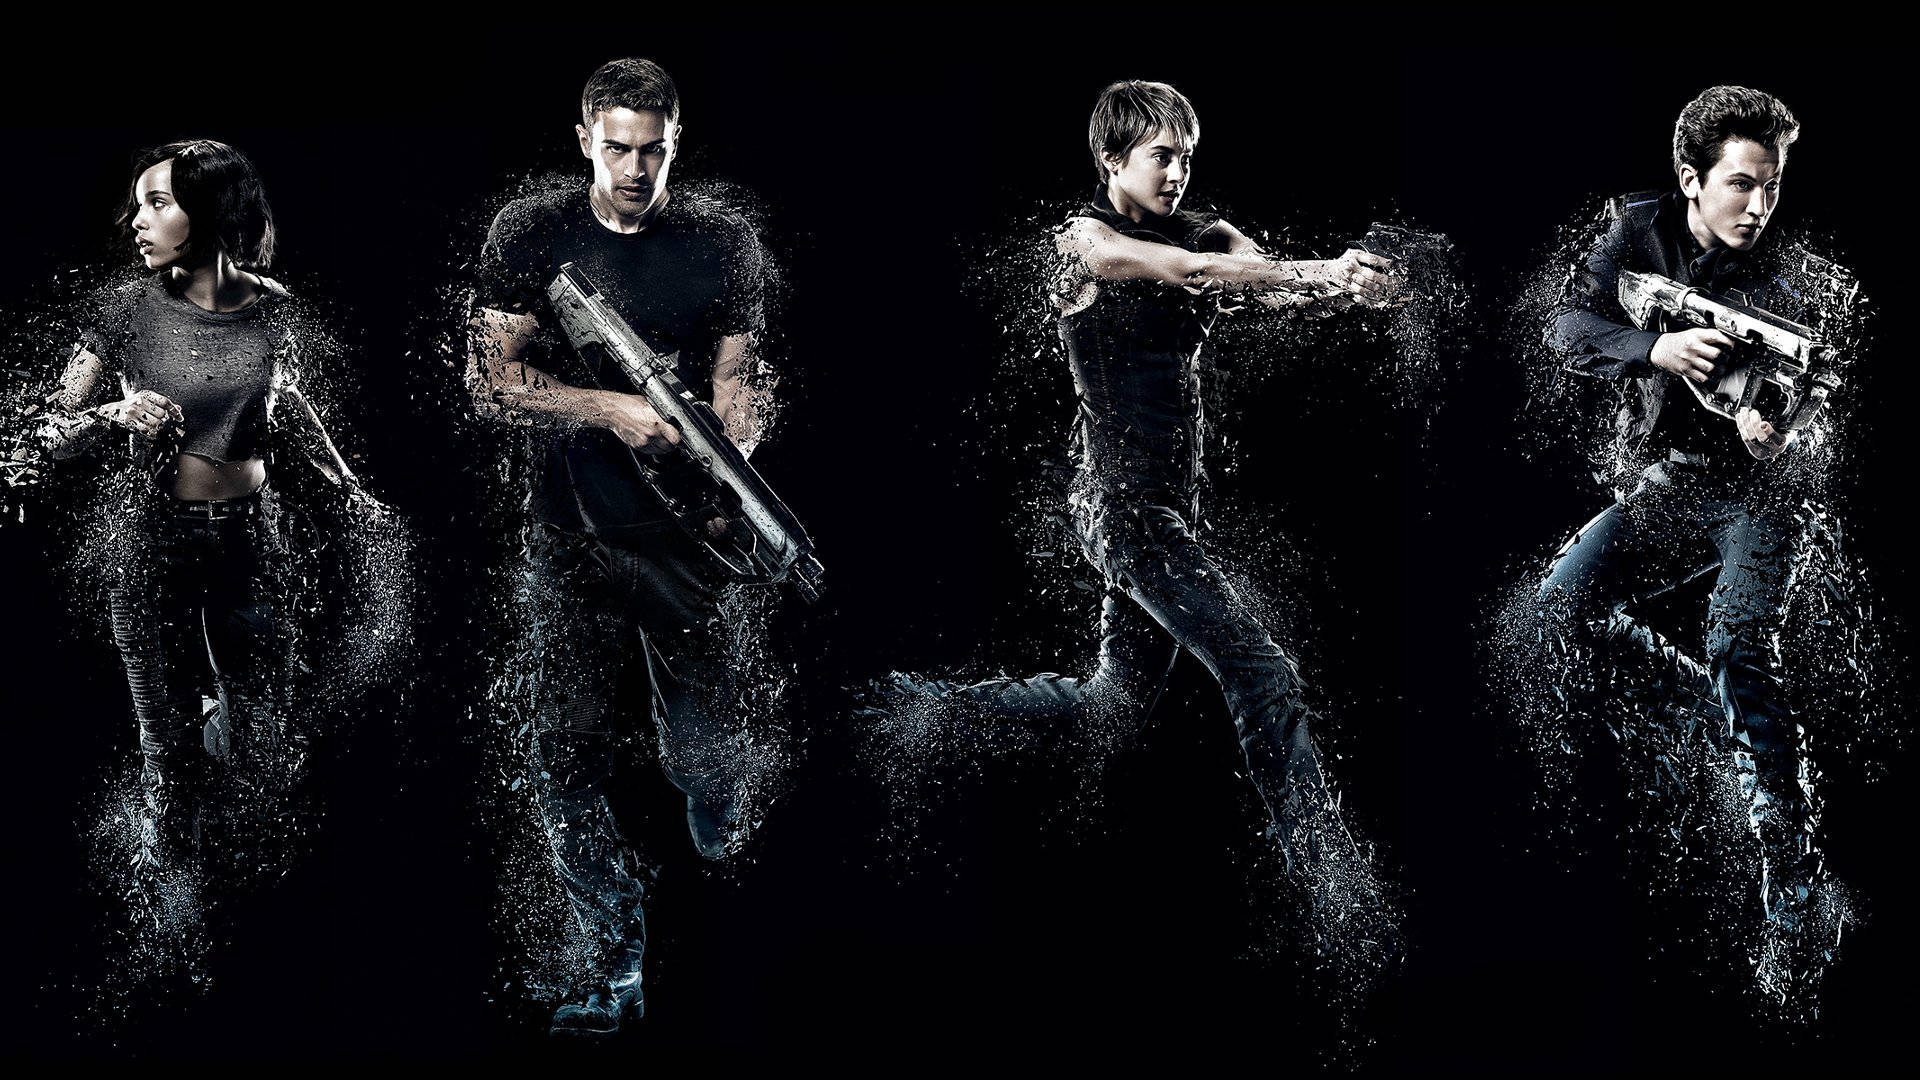 The Divergent Series Gun Fights Digital Artwork Wallpaper